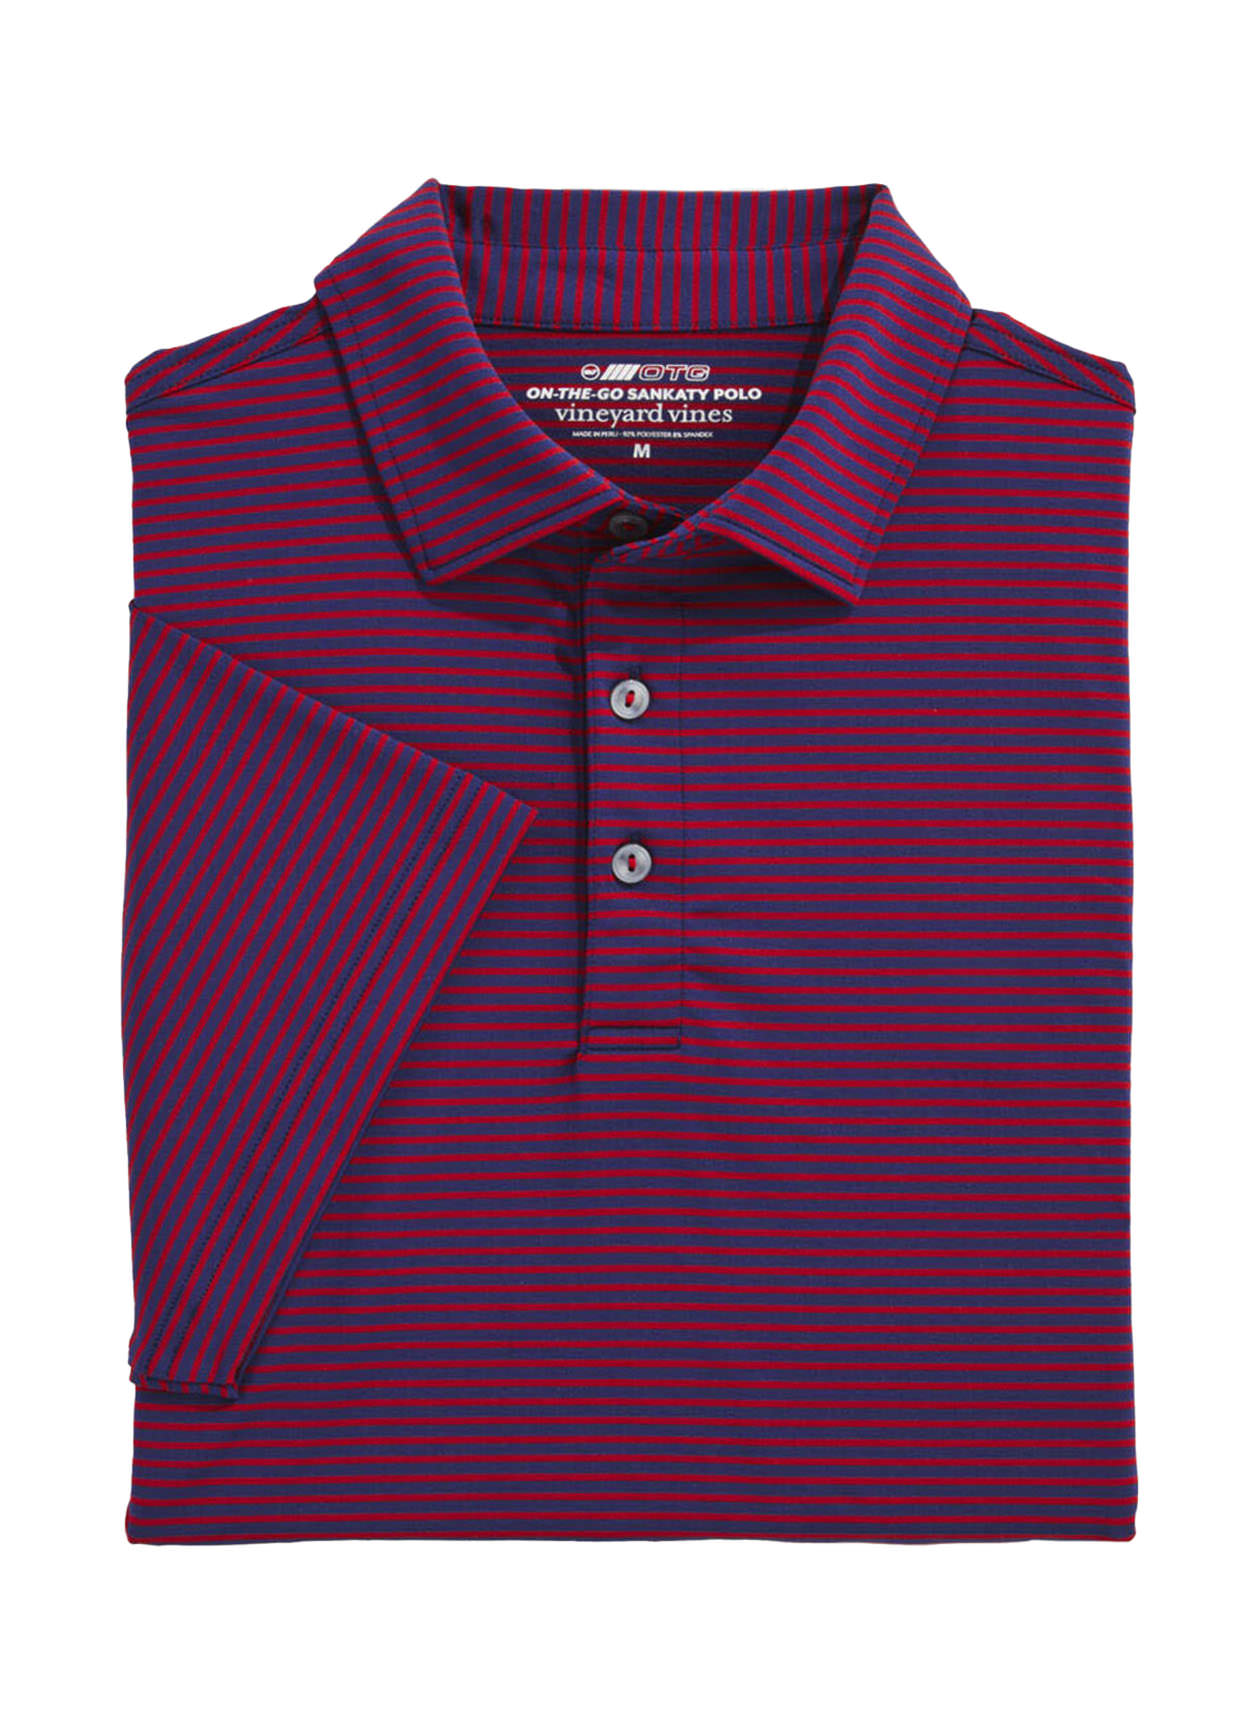 Vineyard Vines Men's Savy Red Bradley Sankaty Polo | Embroidered Polo Shirt